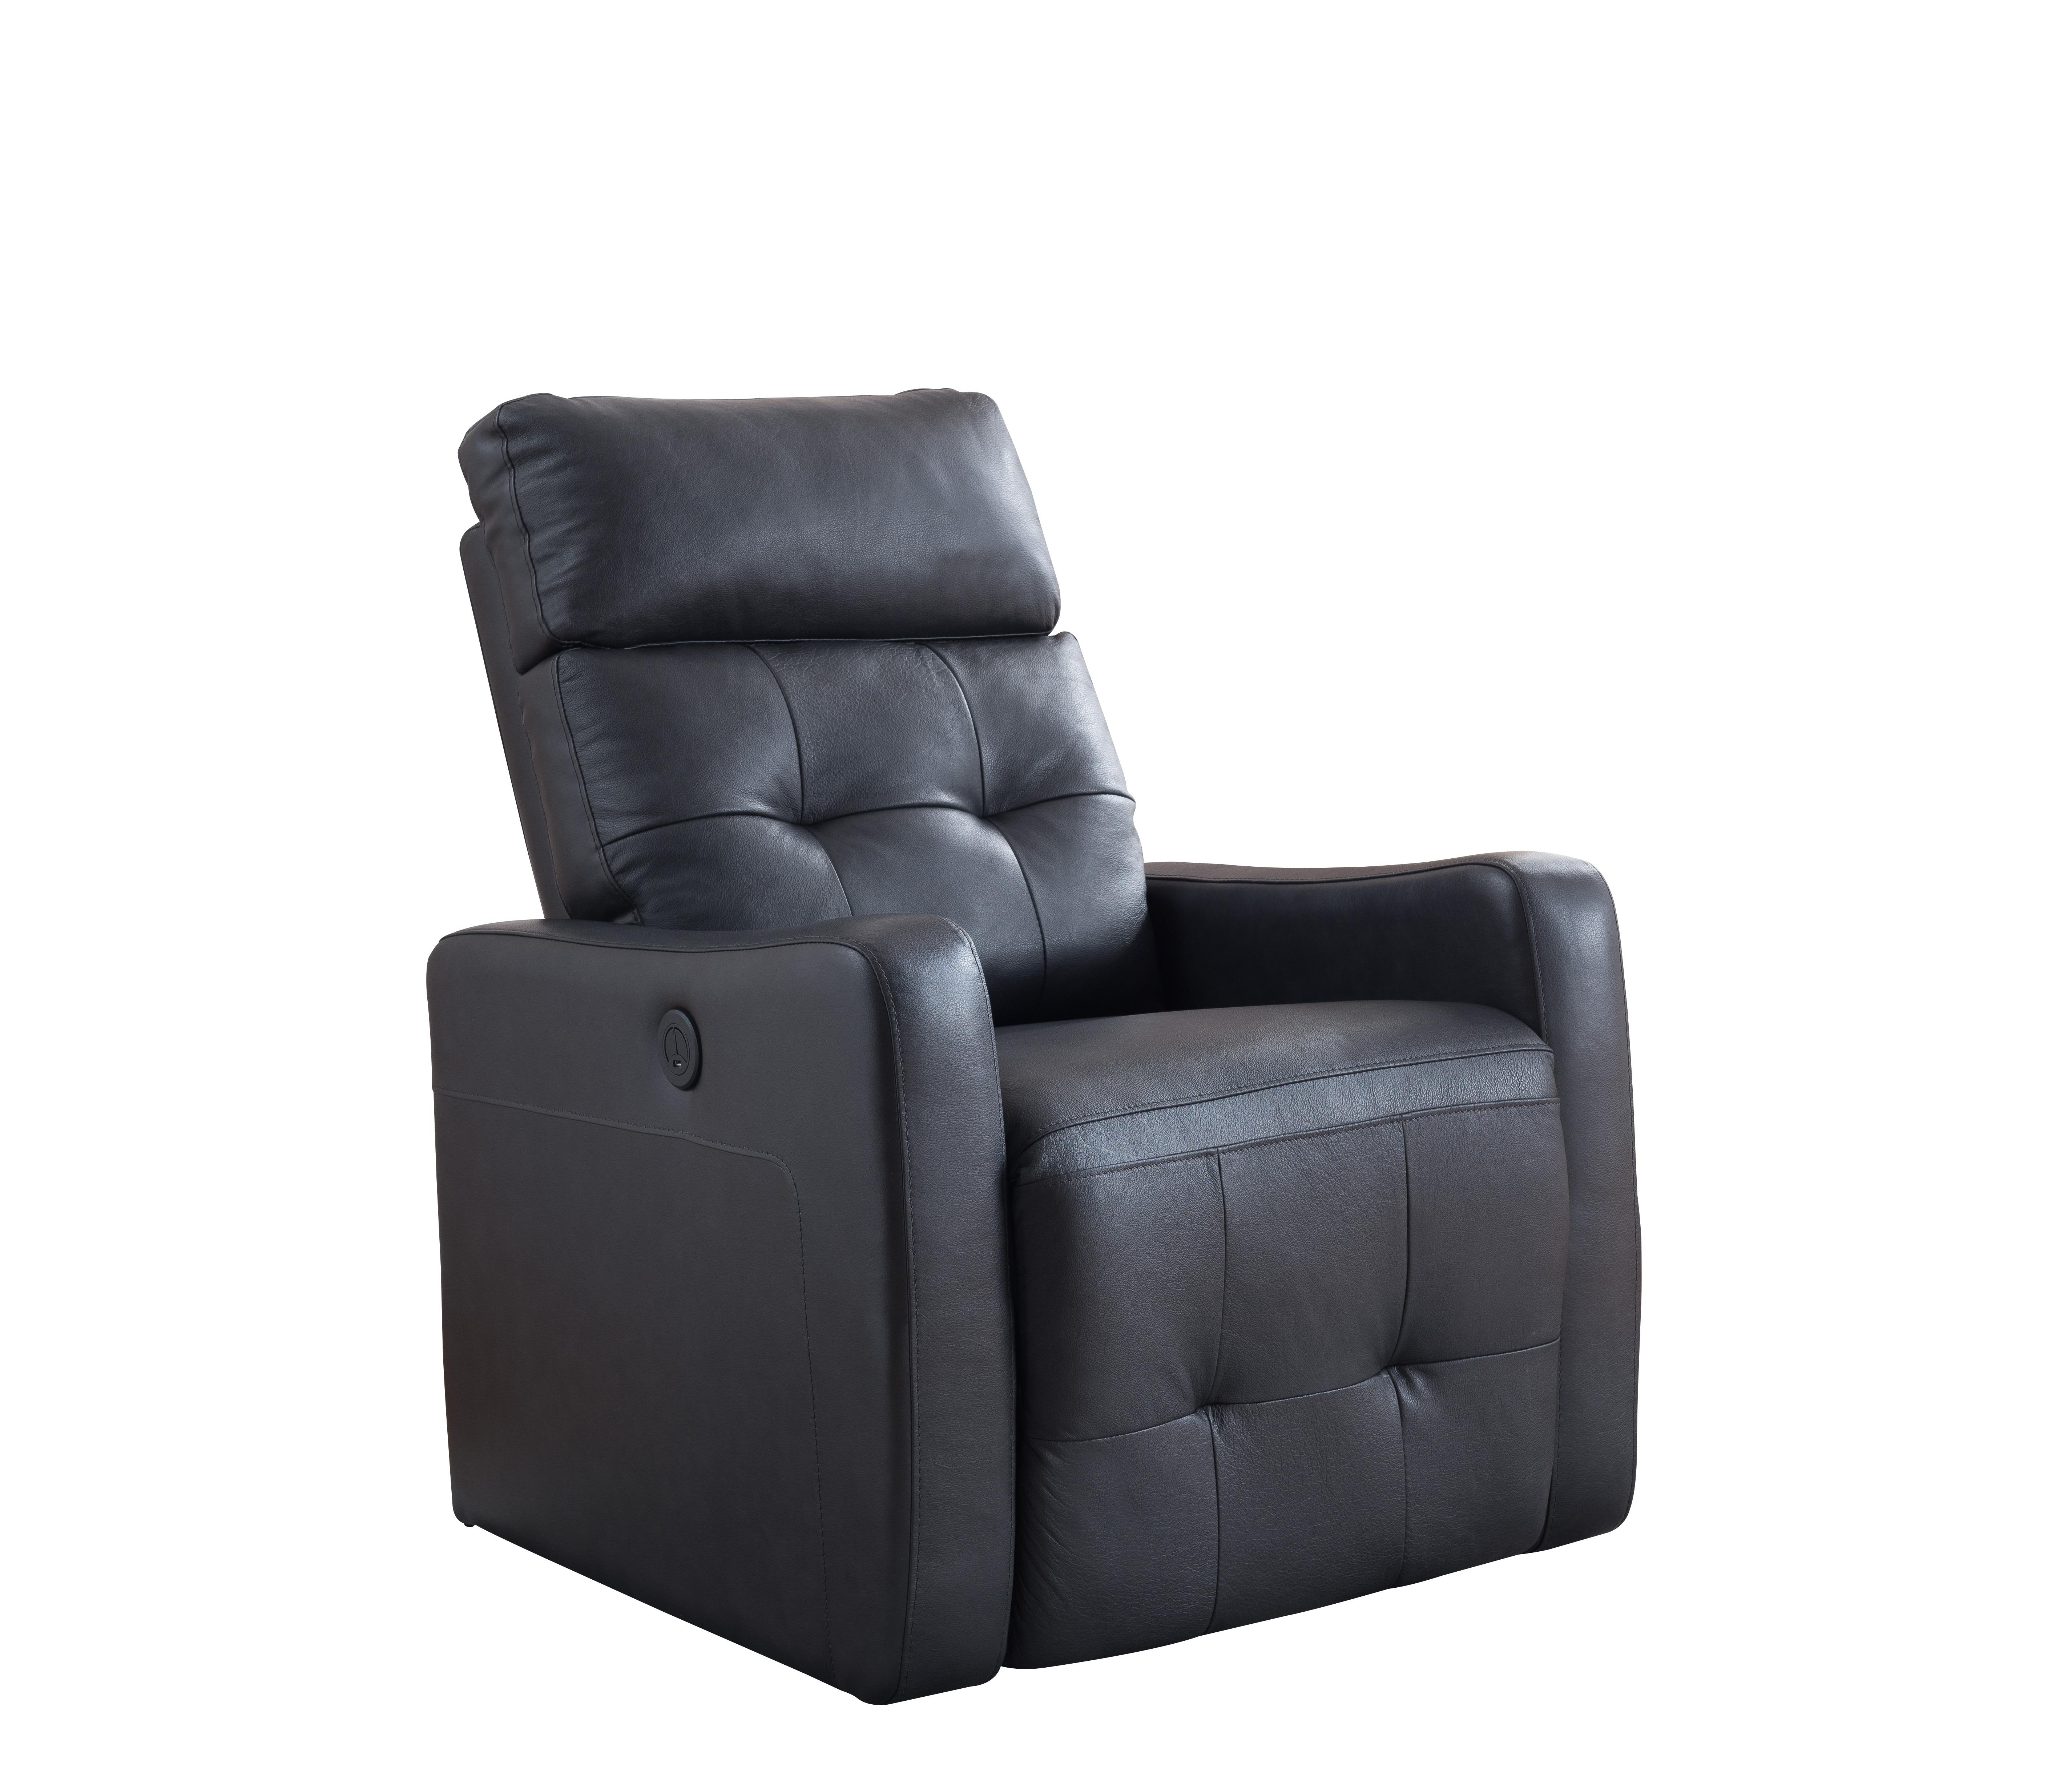 Contemporary Reclining Chair Elsa ELSA-Black-PRC-1 in Black Leather Match